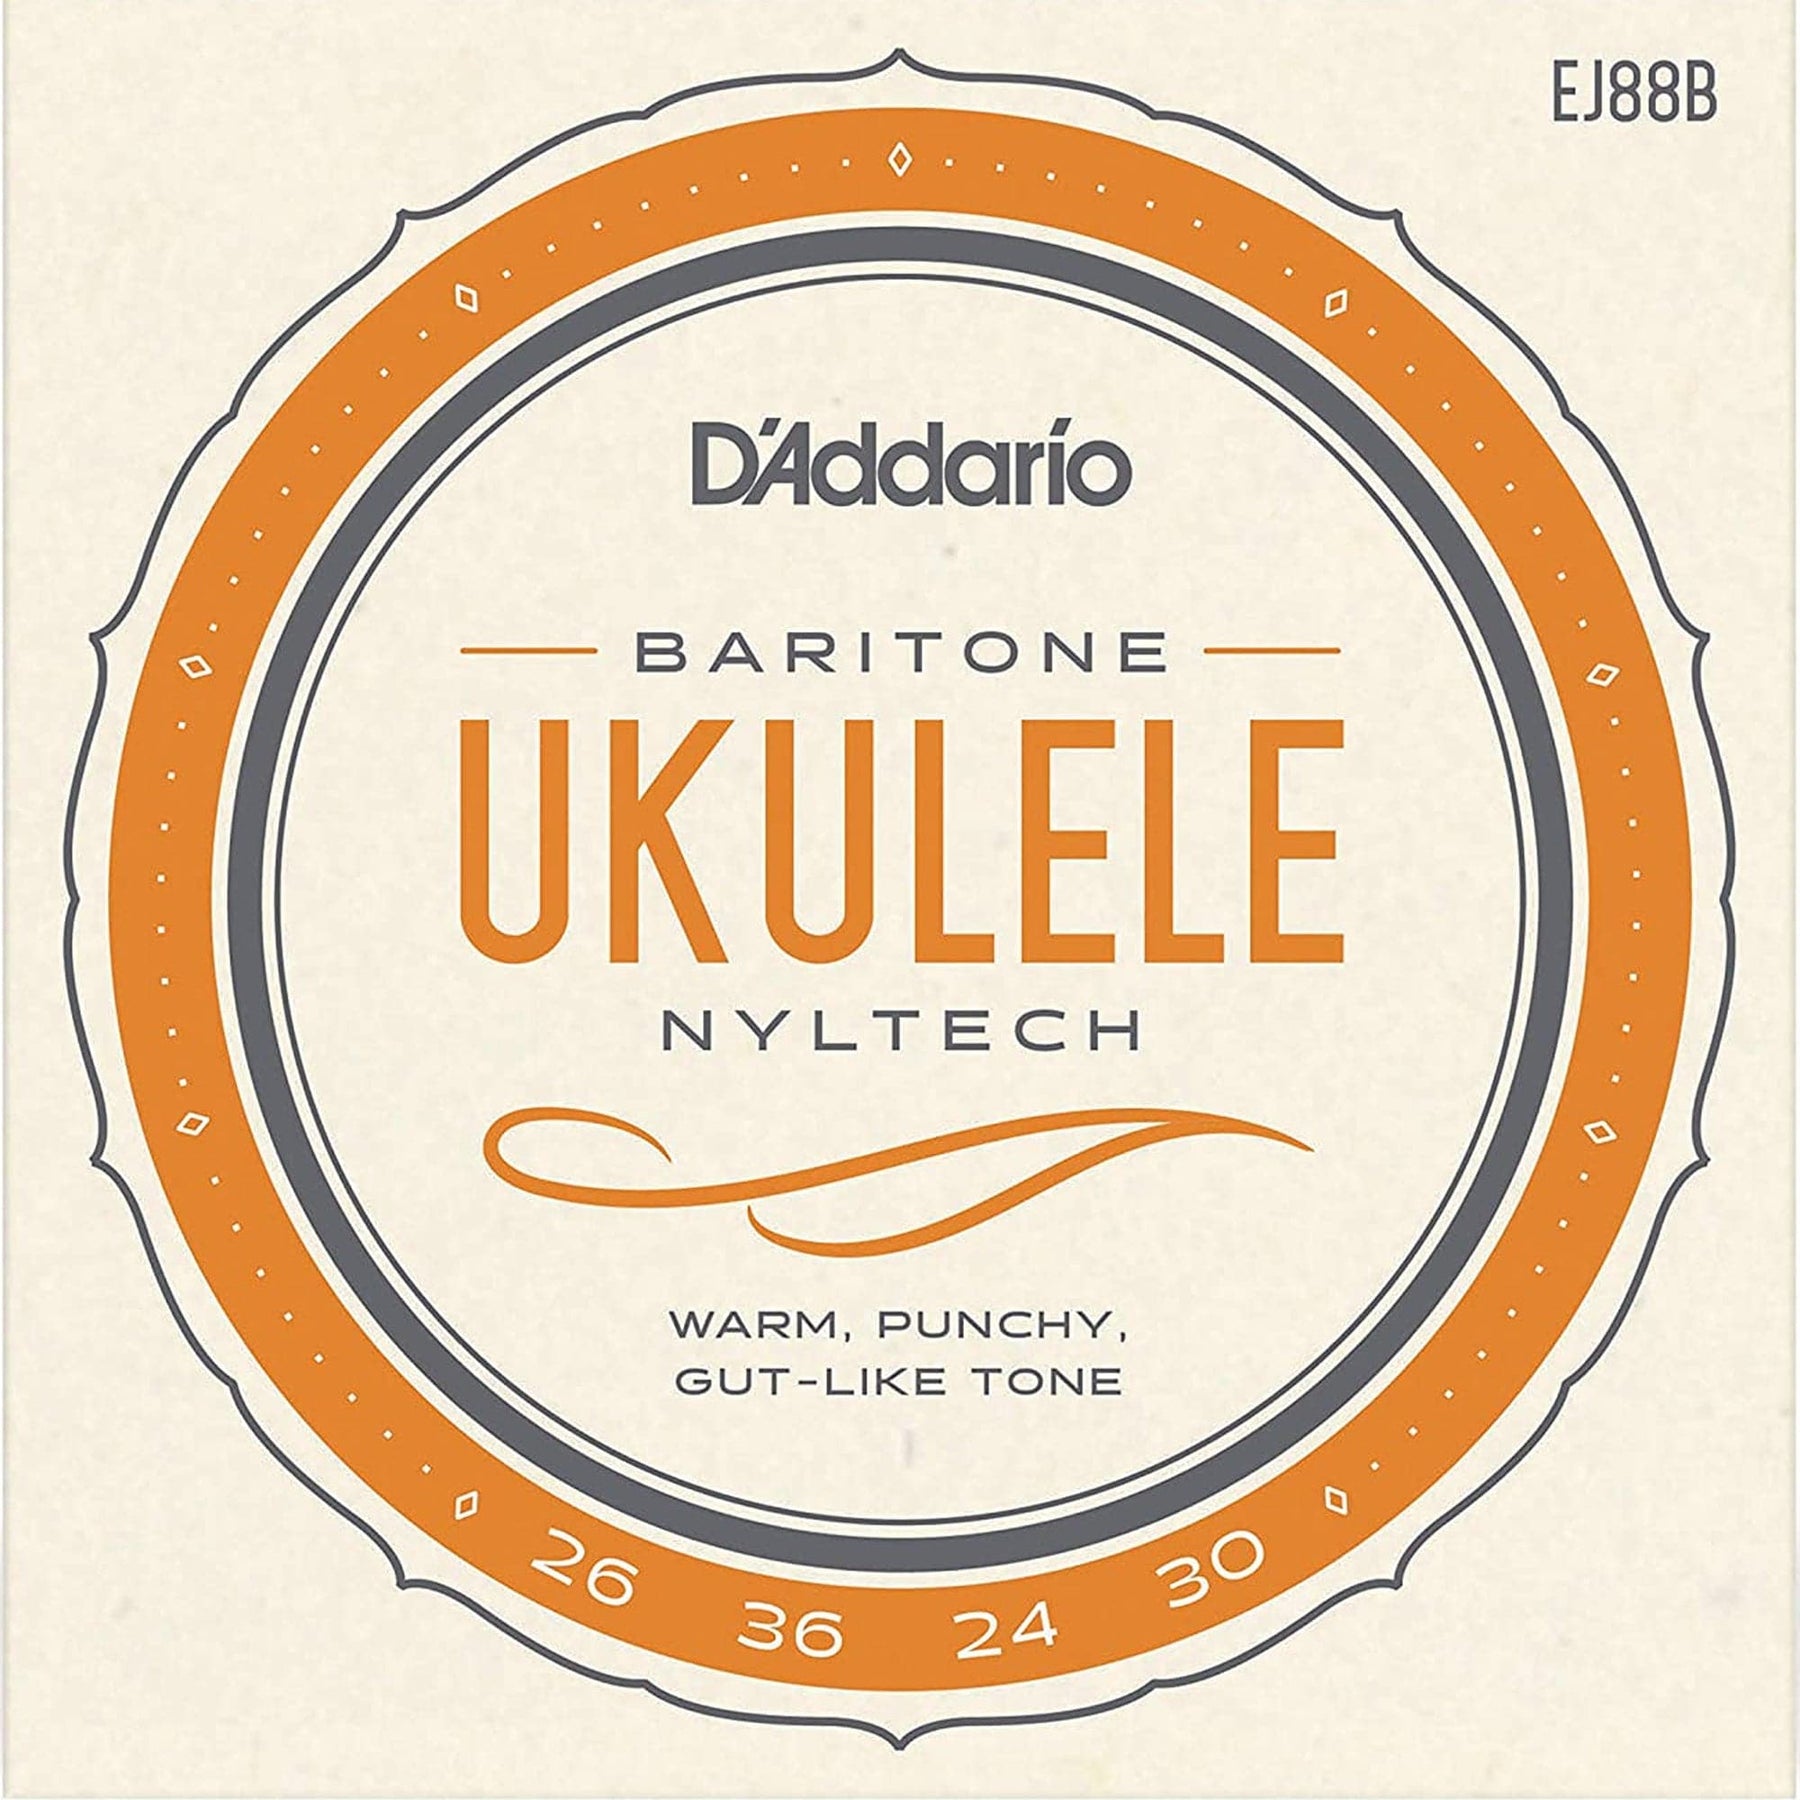 D'Addario Aquila EJ88B Nyltech Baritone Ukulele Strings